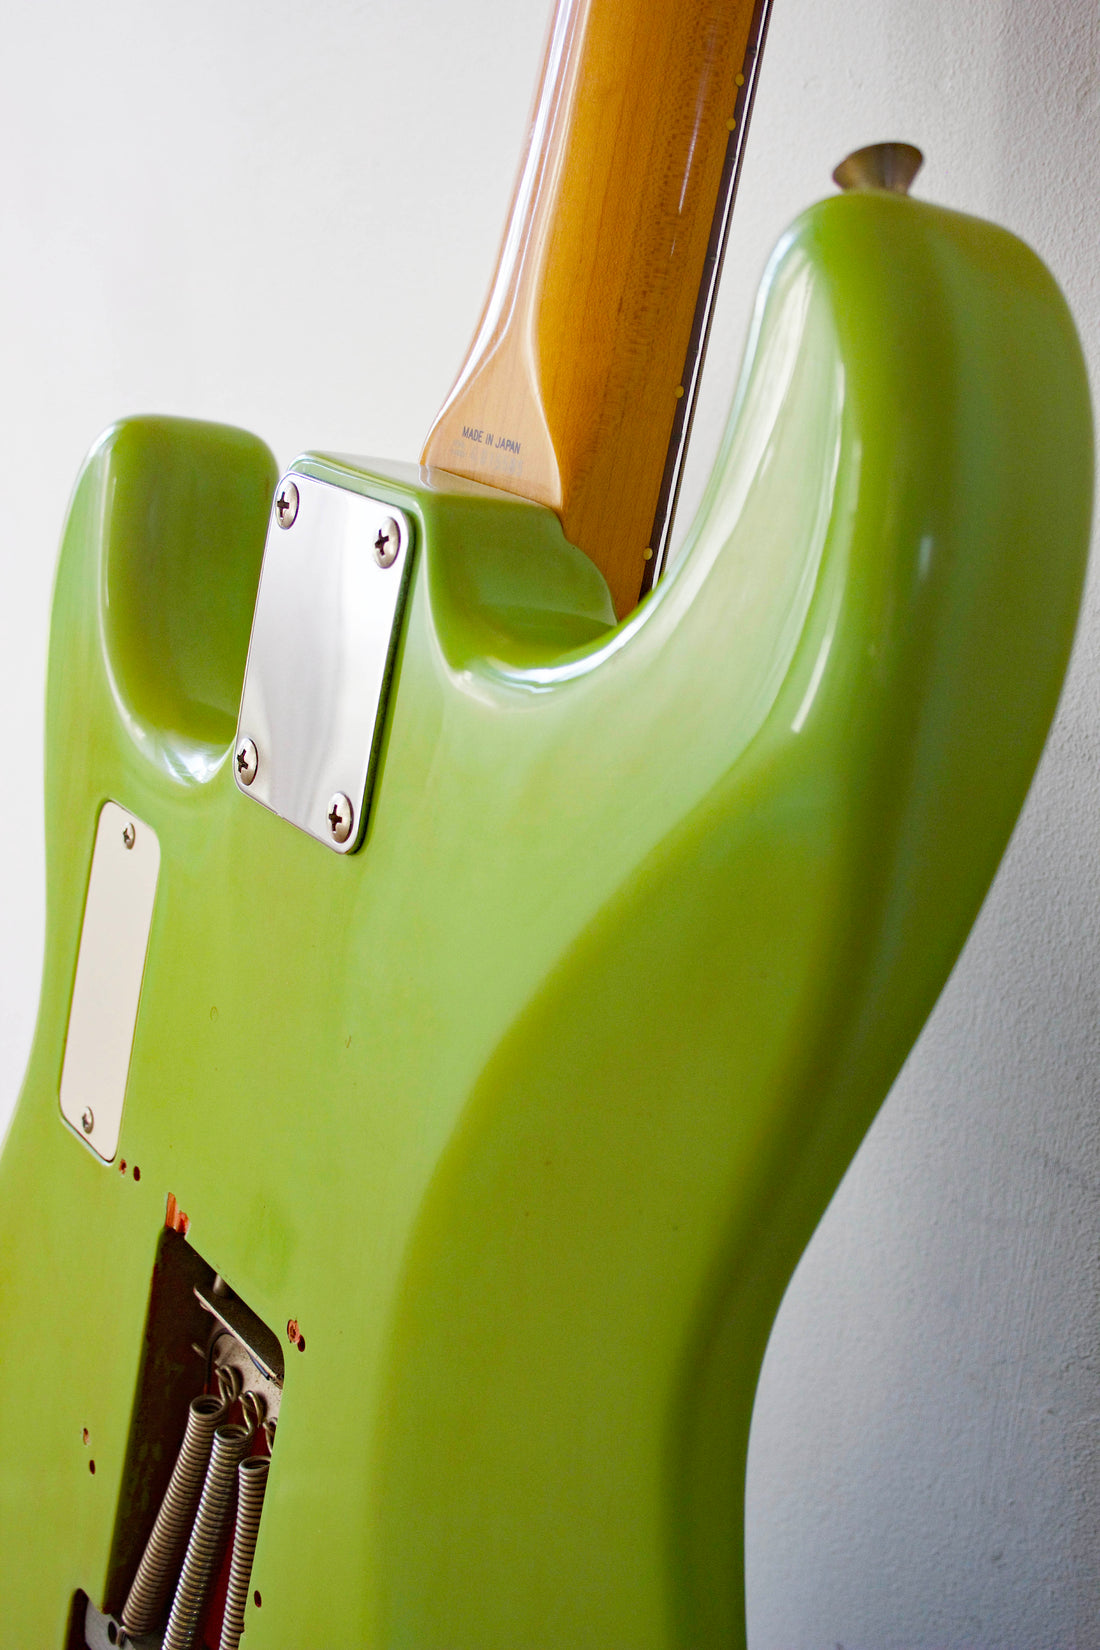 Fender '62 Reissue Stratocaster ST62-770LS Faded Surf Green 1989